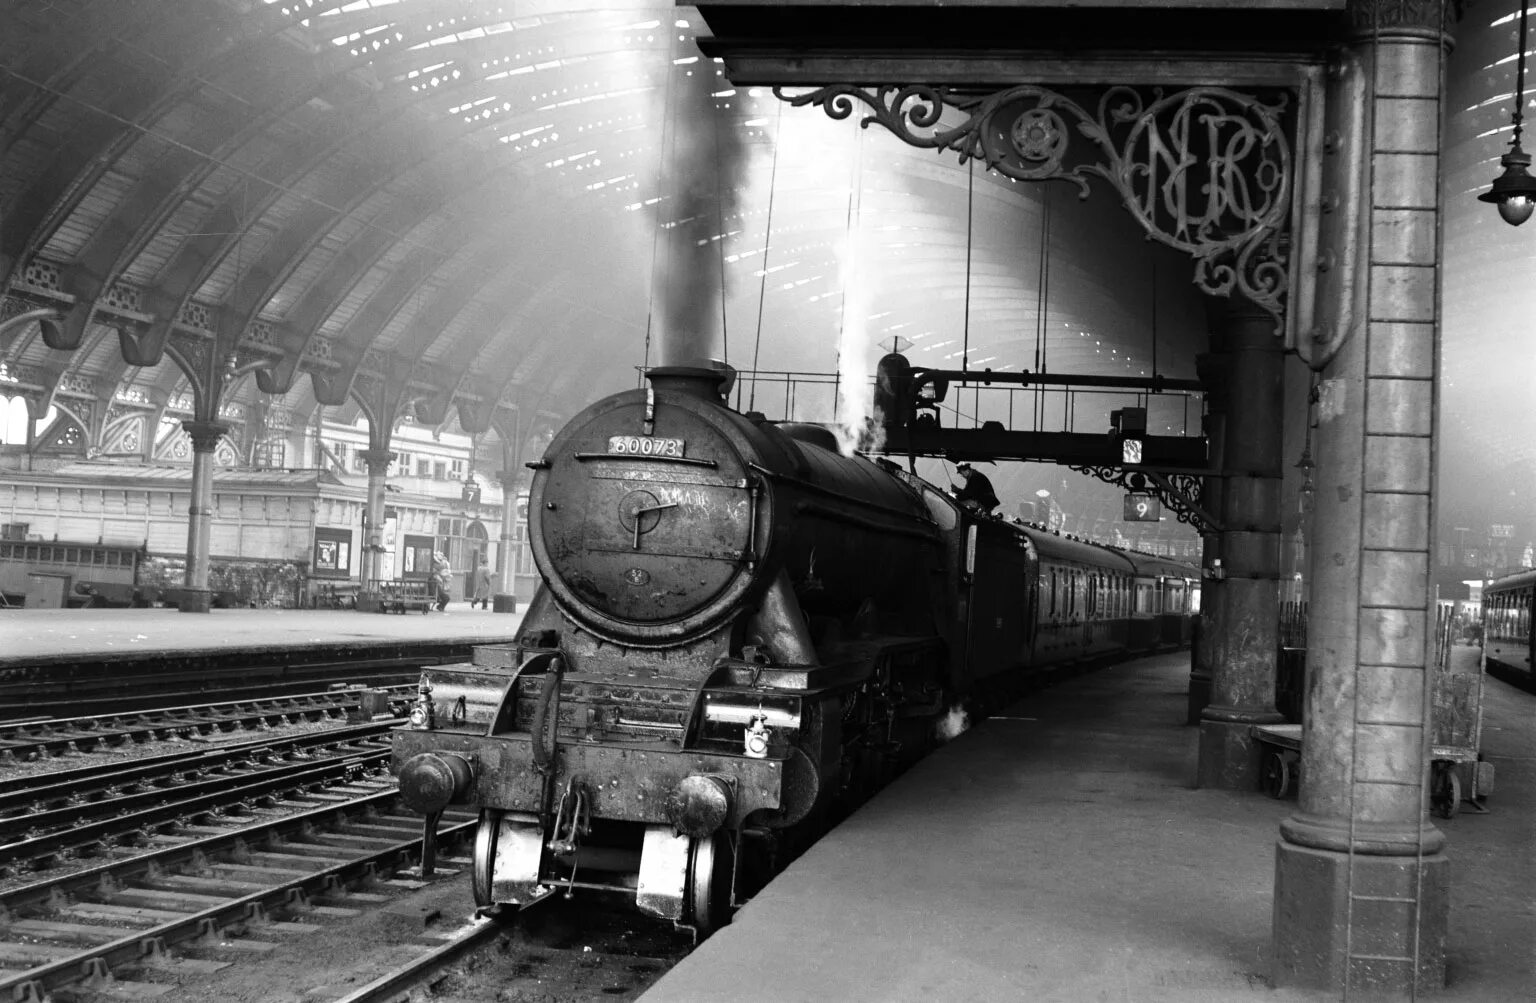 Включи старая станция. Поезд-призрак «Санетти». Санетти поезд 1911. Поезд призрак Занетти. Поезд призрак 1911 года.